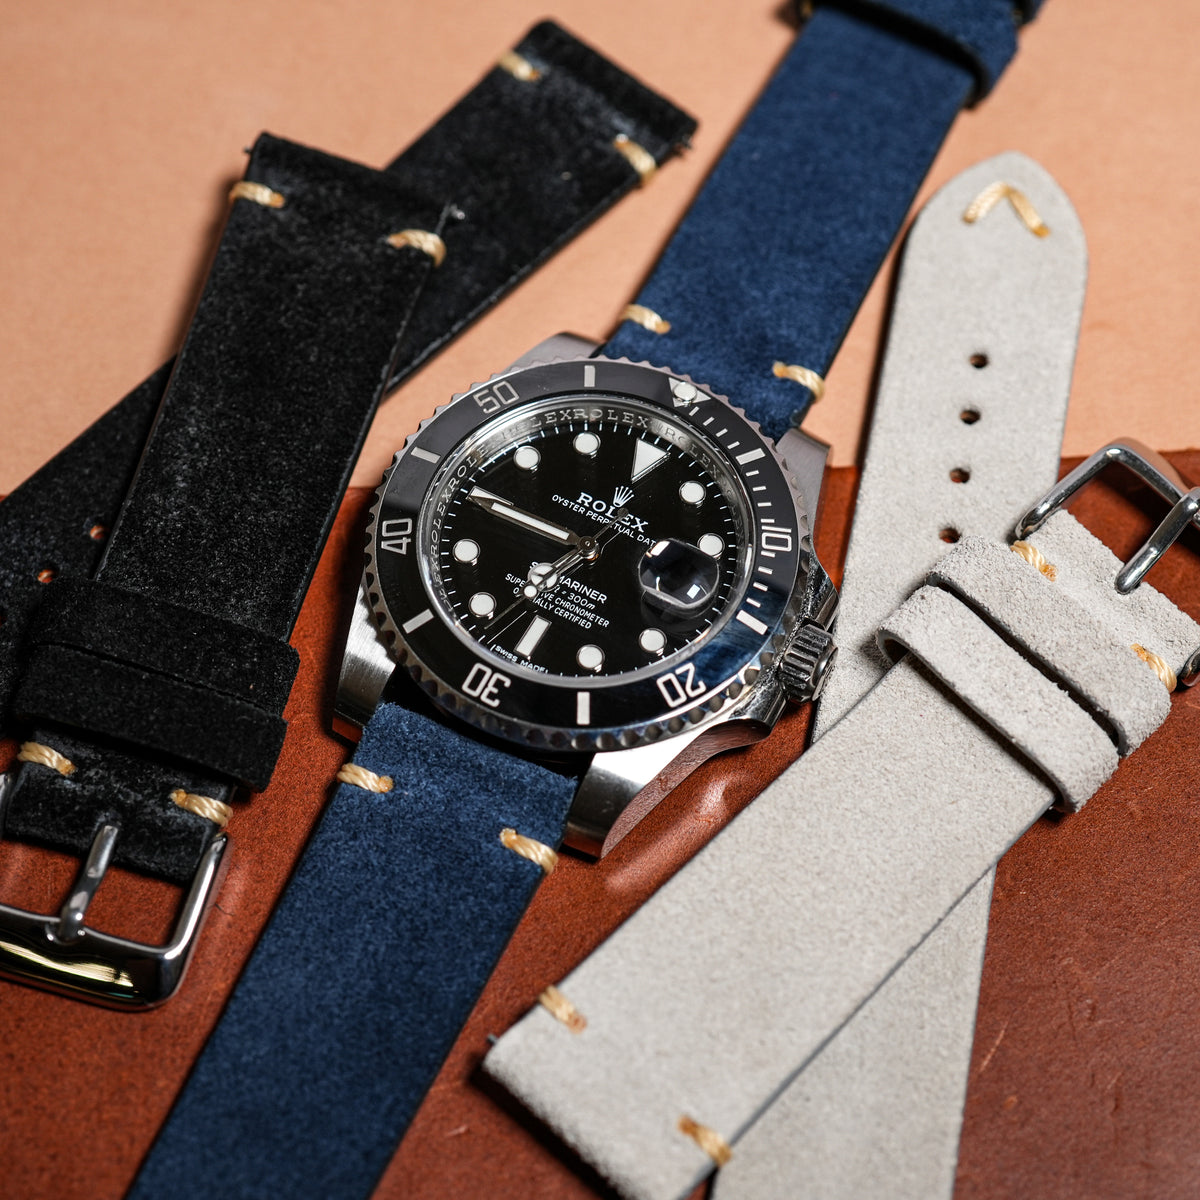 Premium Vintage Suede Leather Watch Strap in Navy - Nomad Watch Works SG